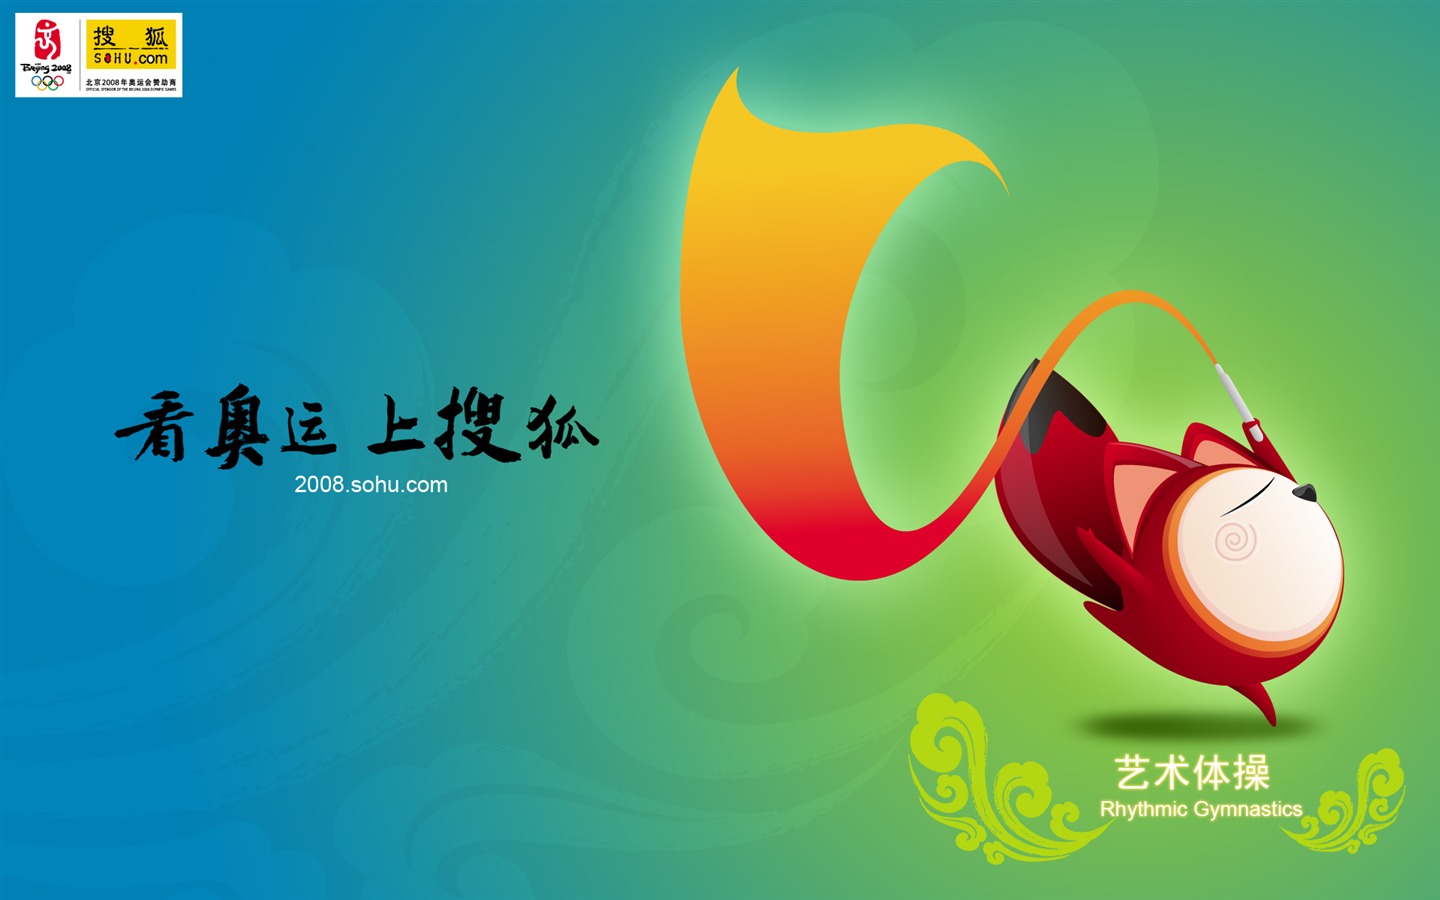 Sohu Olympic sports style wallpaper #18 - 1440x900